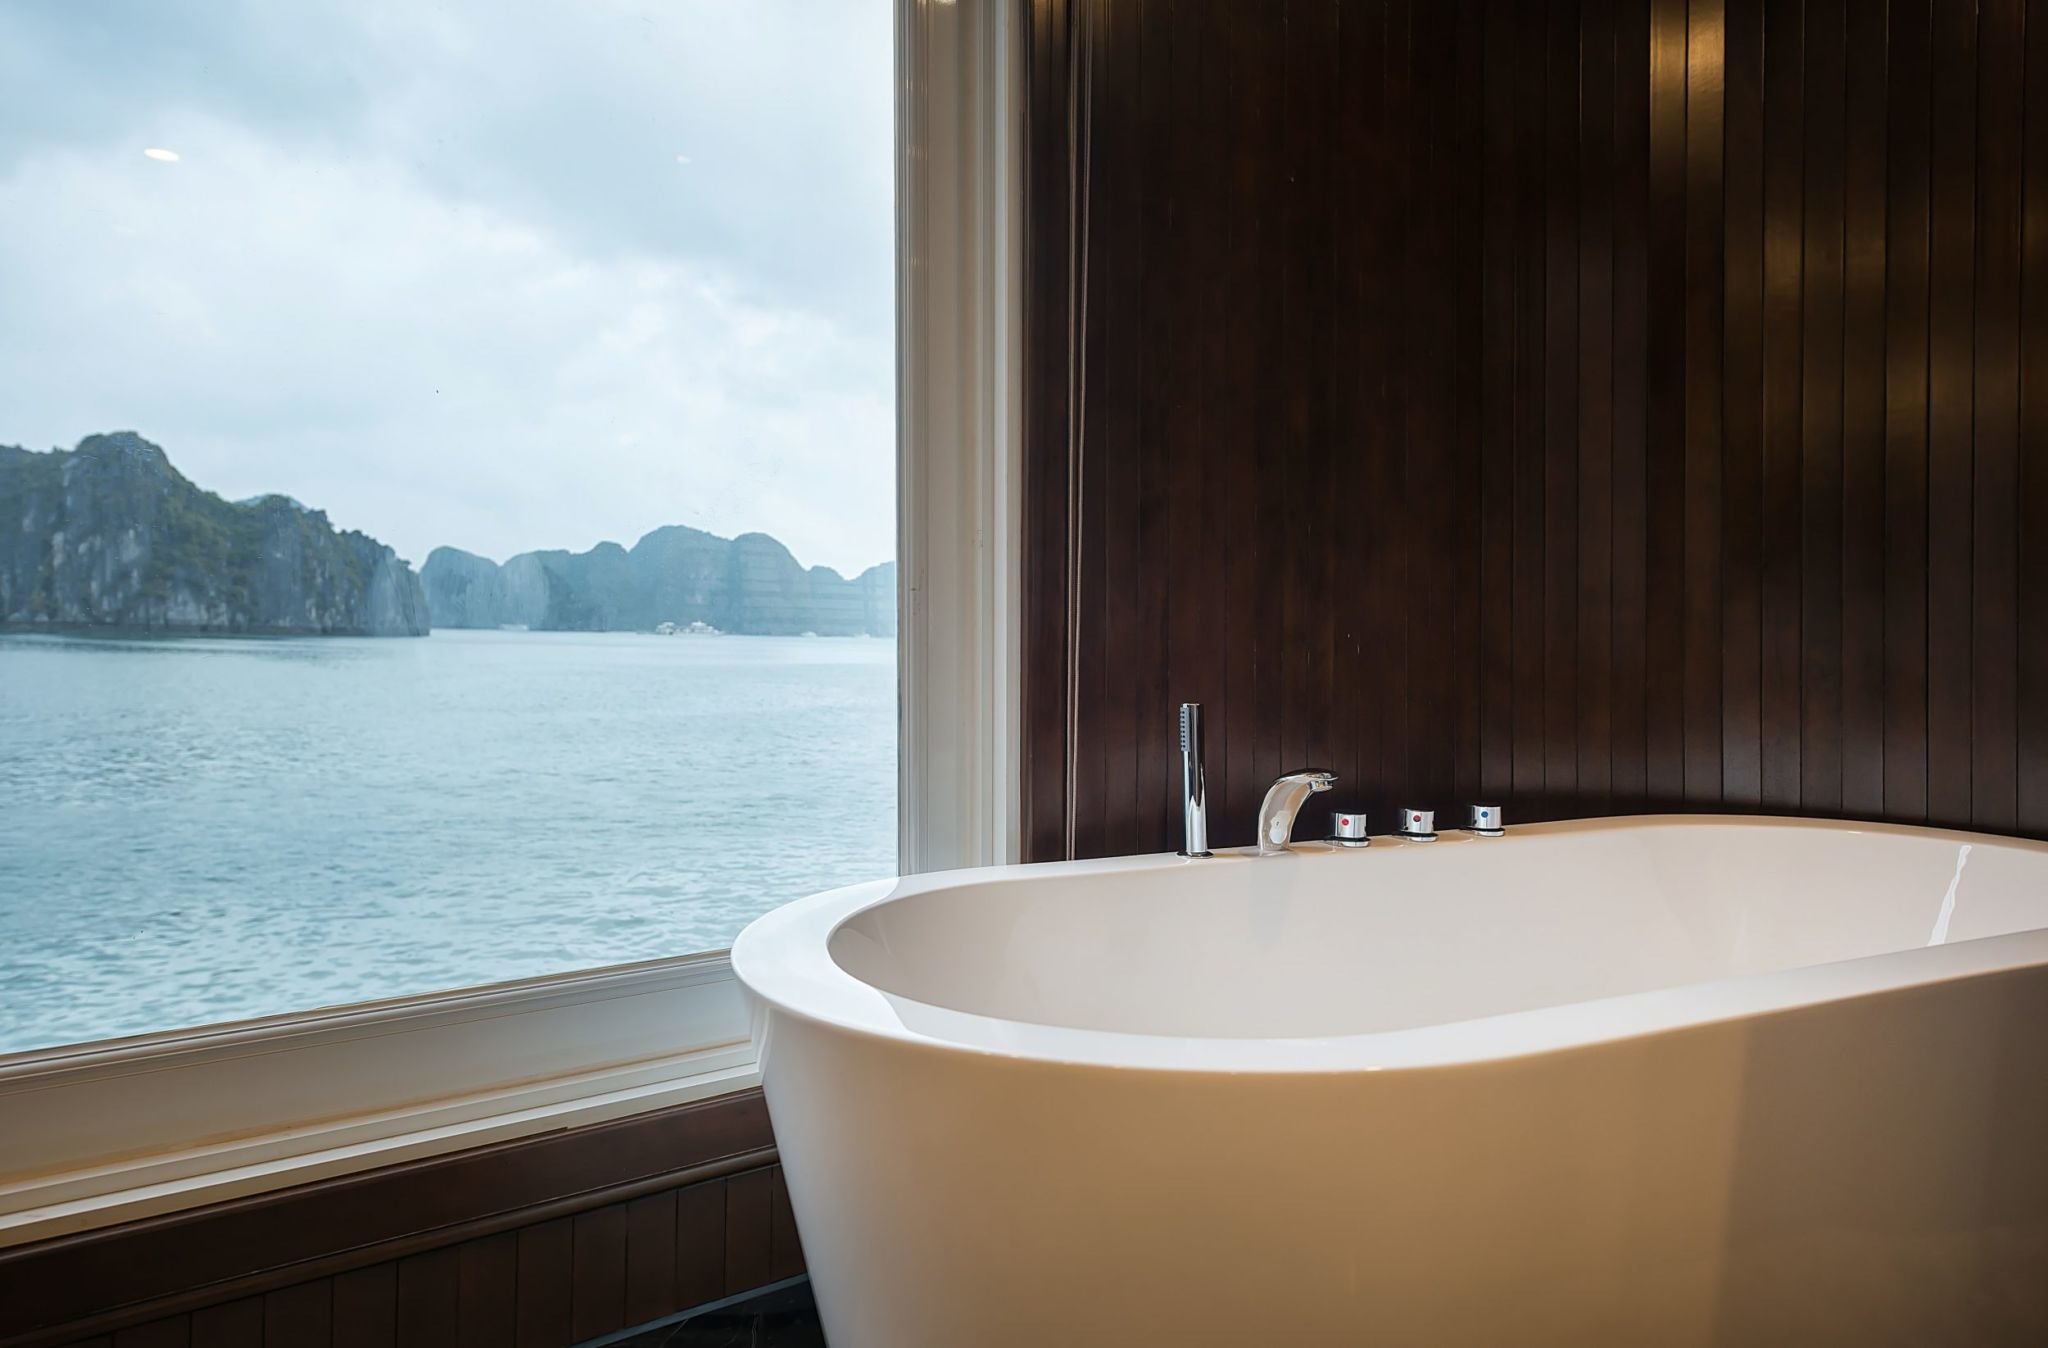 LuxeGetaways - Luxury Travel - Luxury Travel Magazine - Luxe Getaways - Luxury Lifestyle - Paradise Elegance Vietnam - River Cruise - bathtub